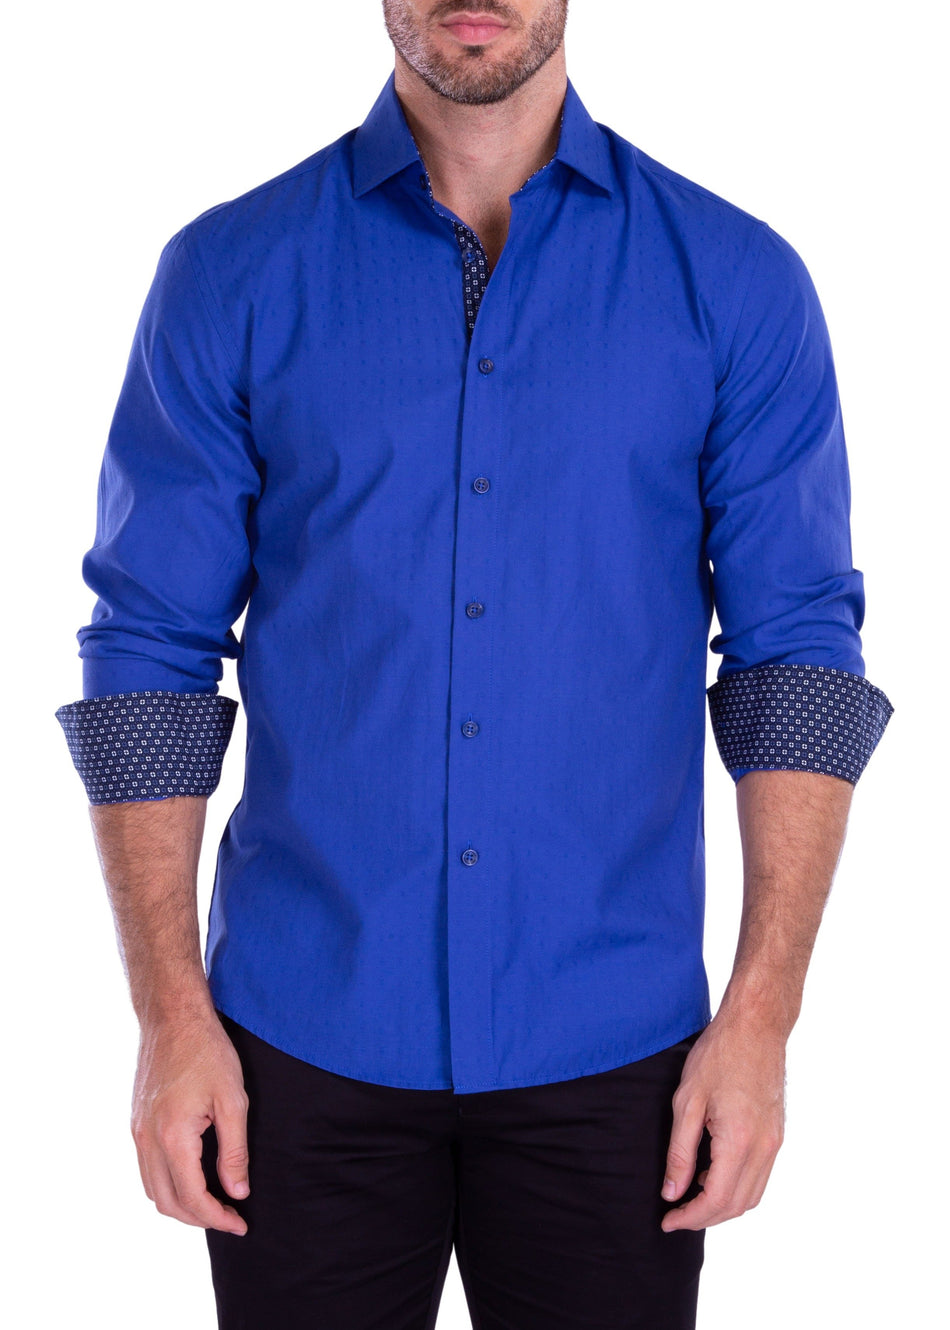 212256 - Men's Royal Button Up Long Sleeve Dress Shirt